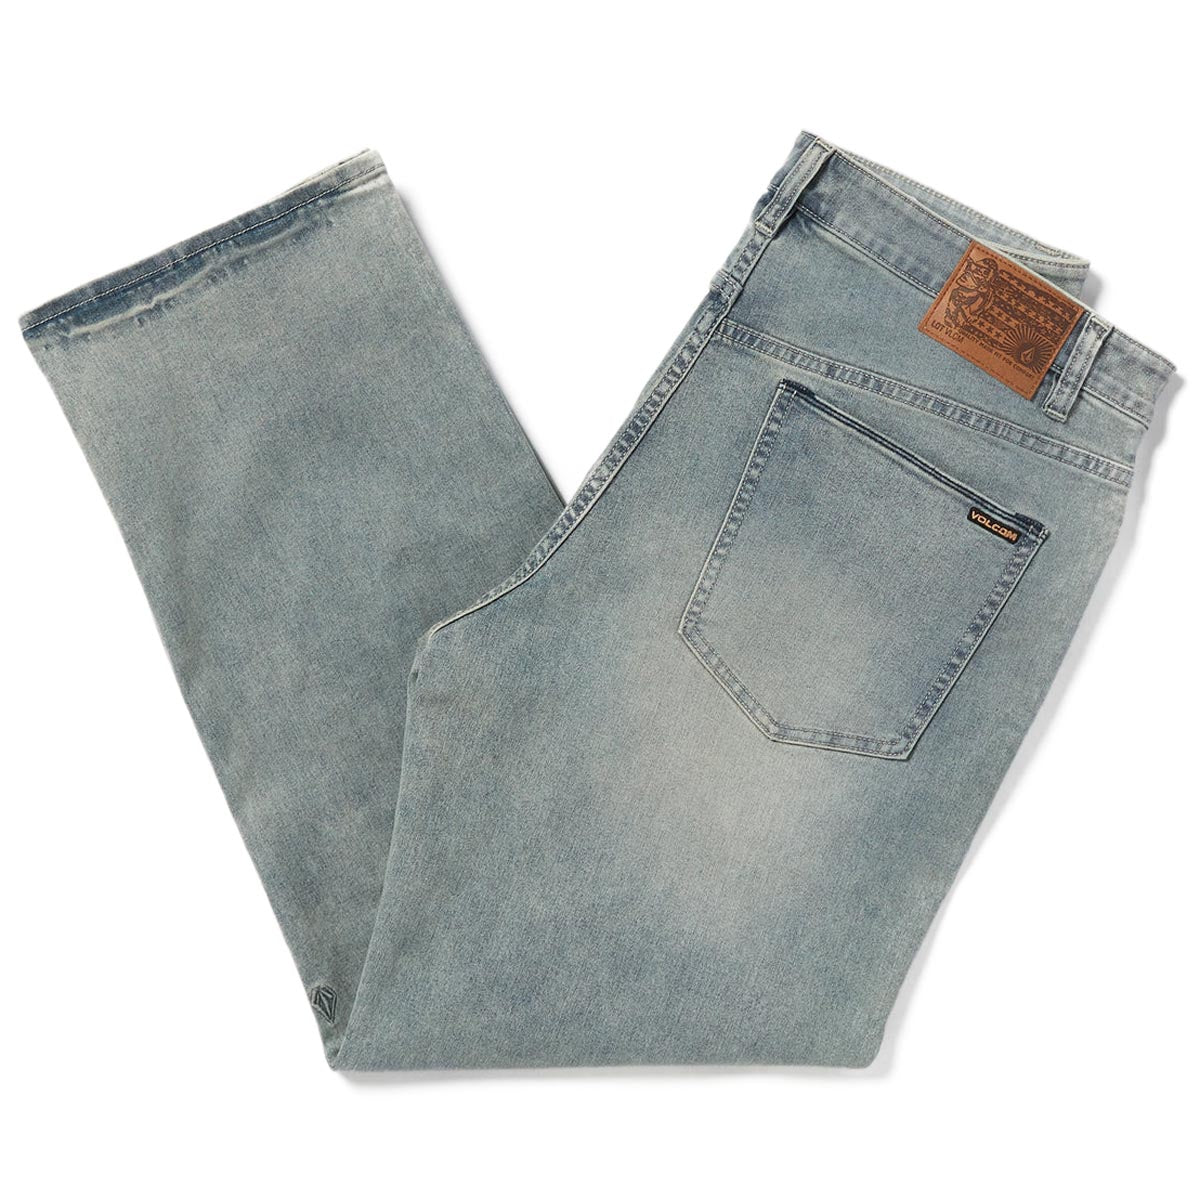 Volcom Nailer Denim Jeans - Sure Shot Light Wash image 2